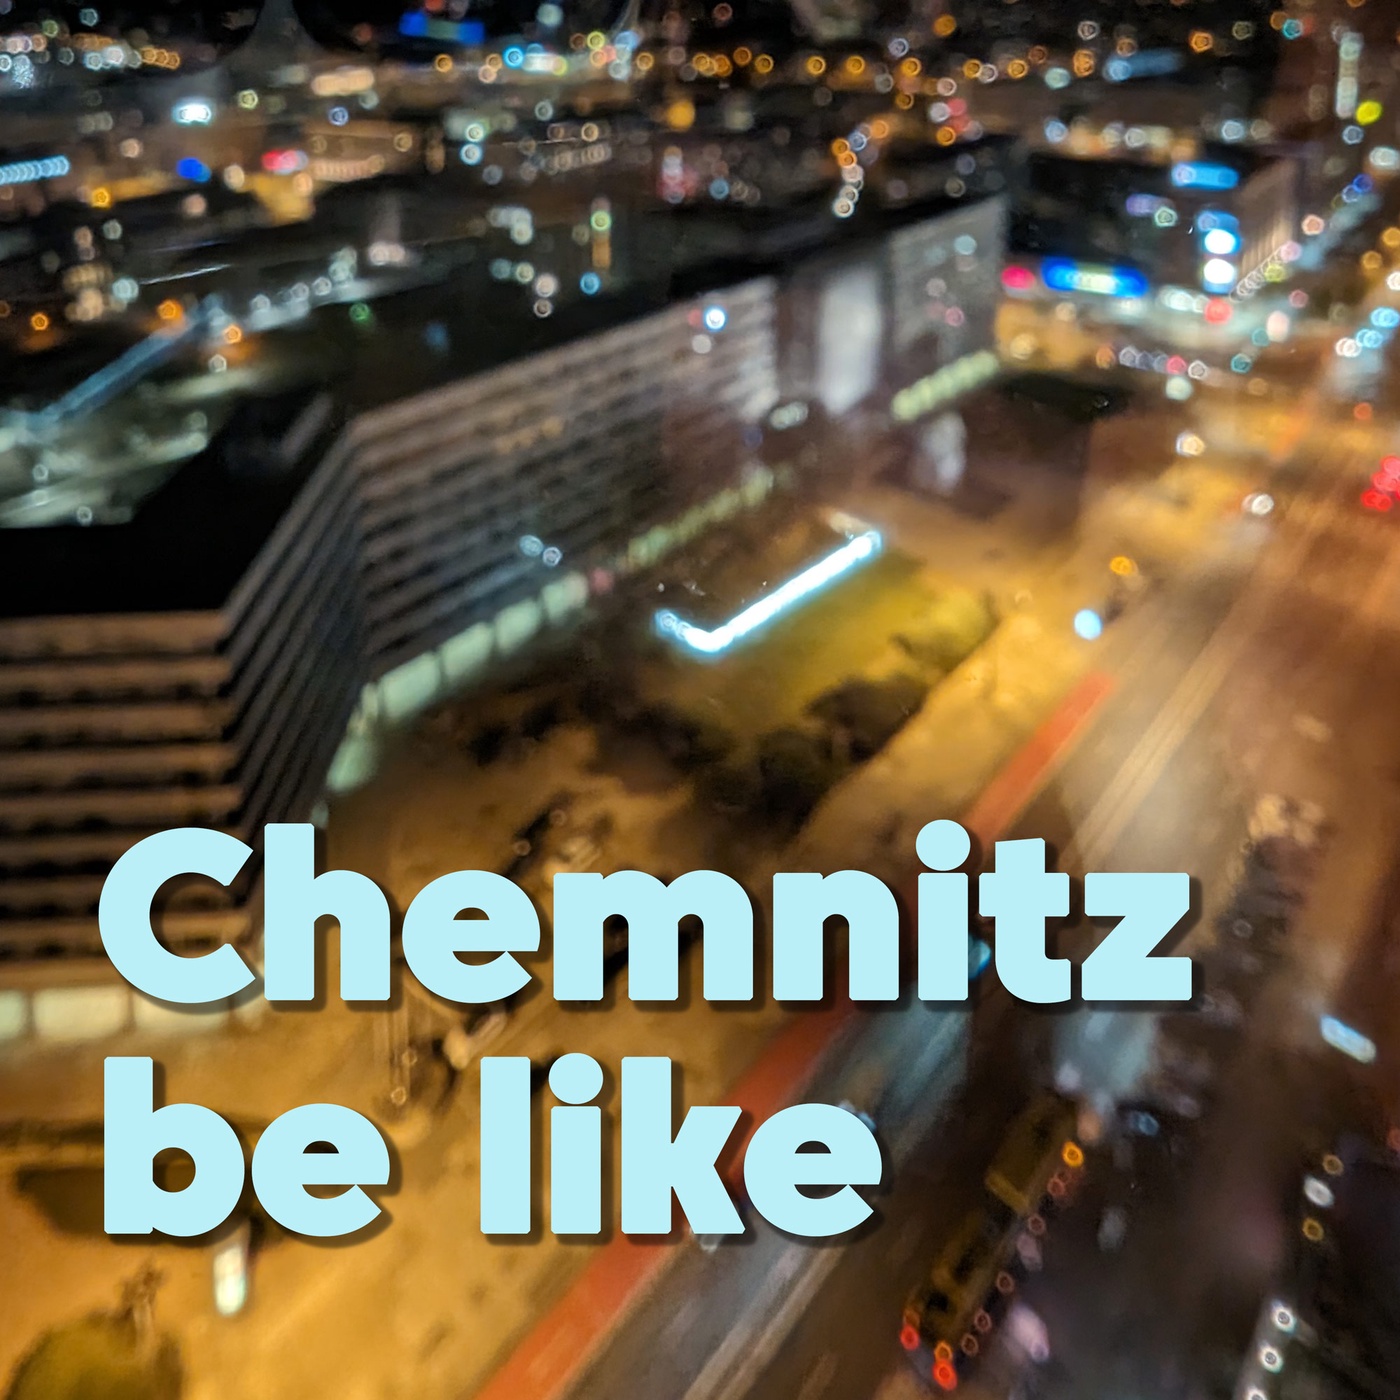 Chemnitz be like